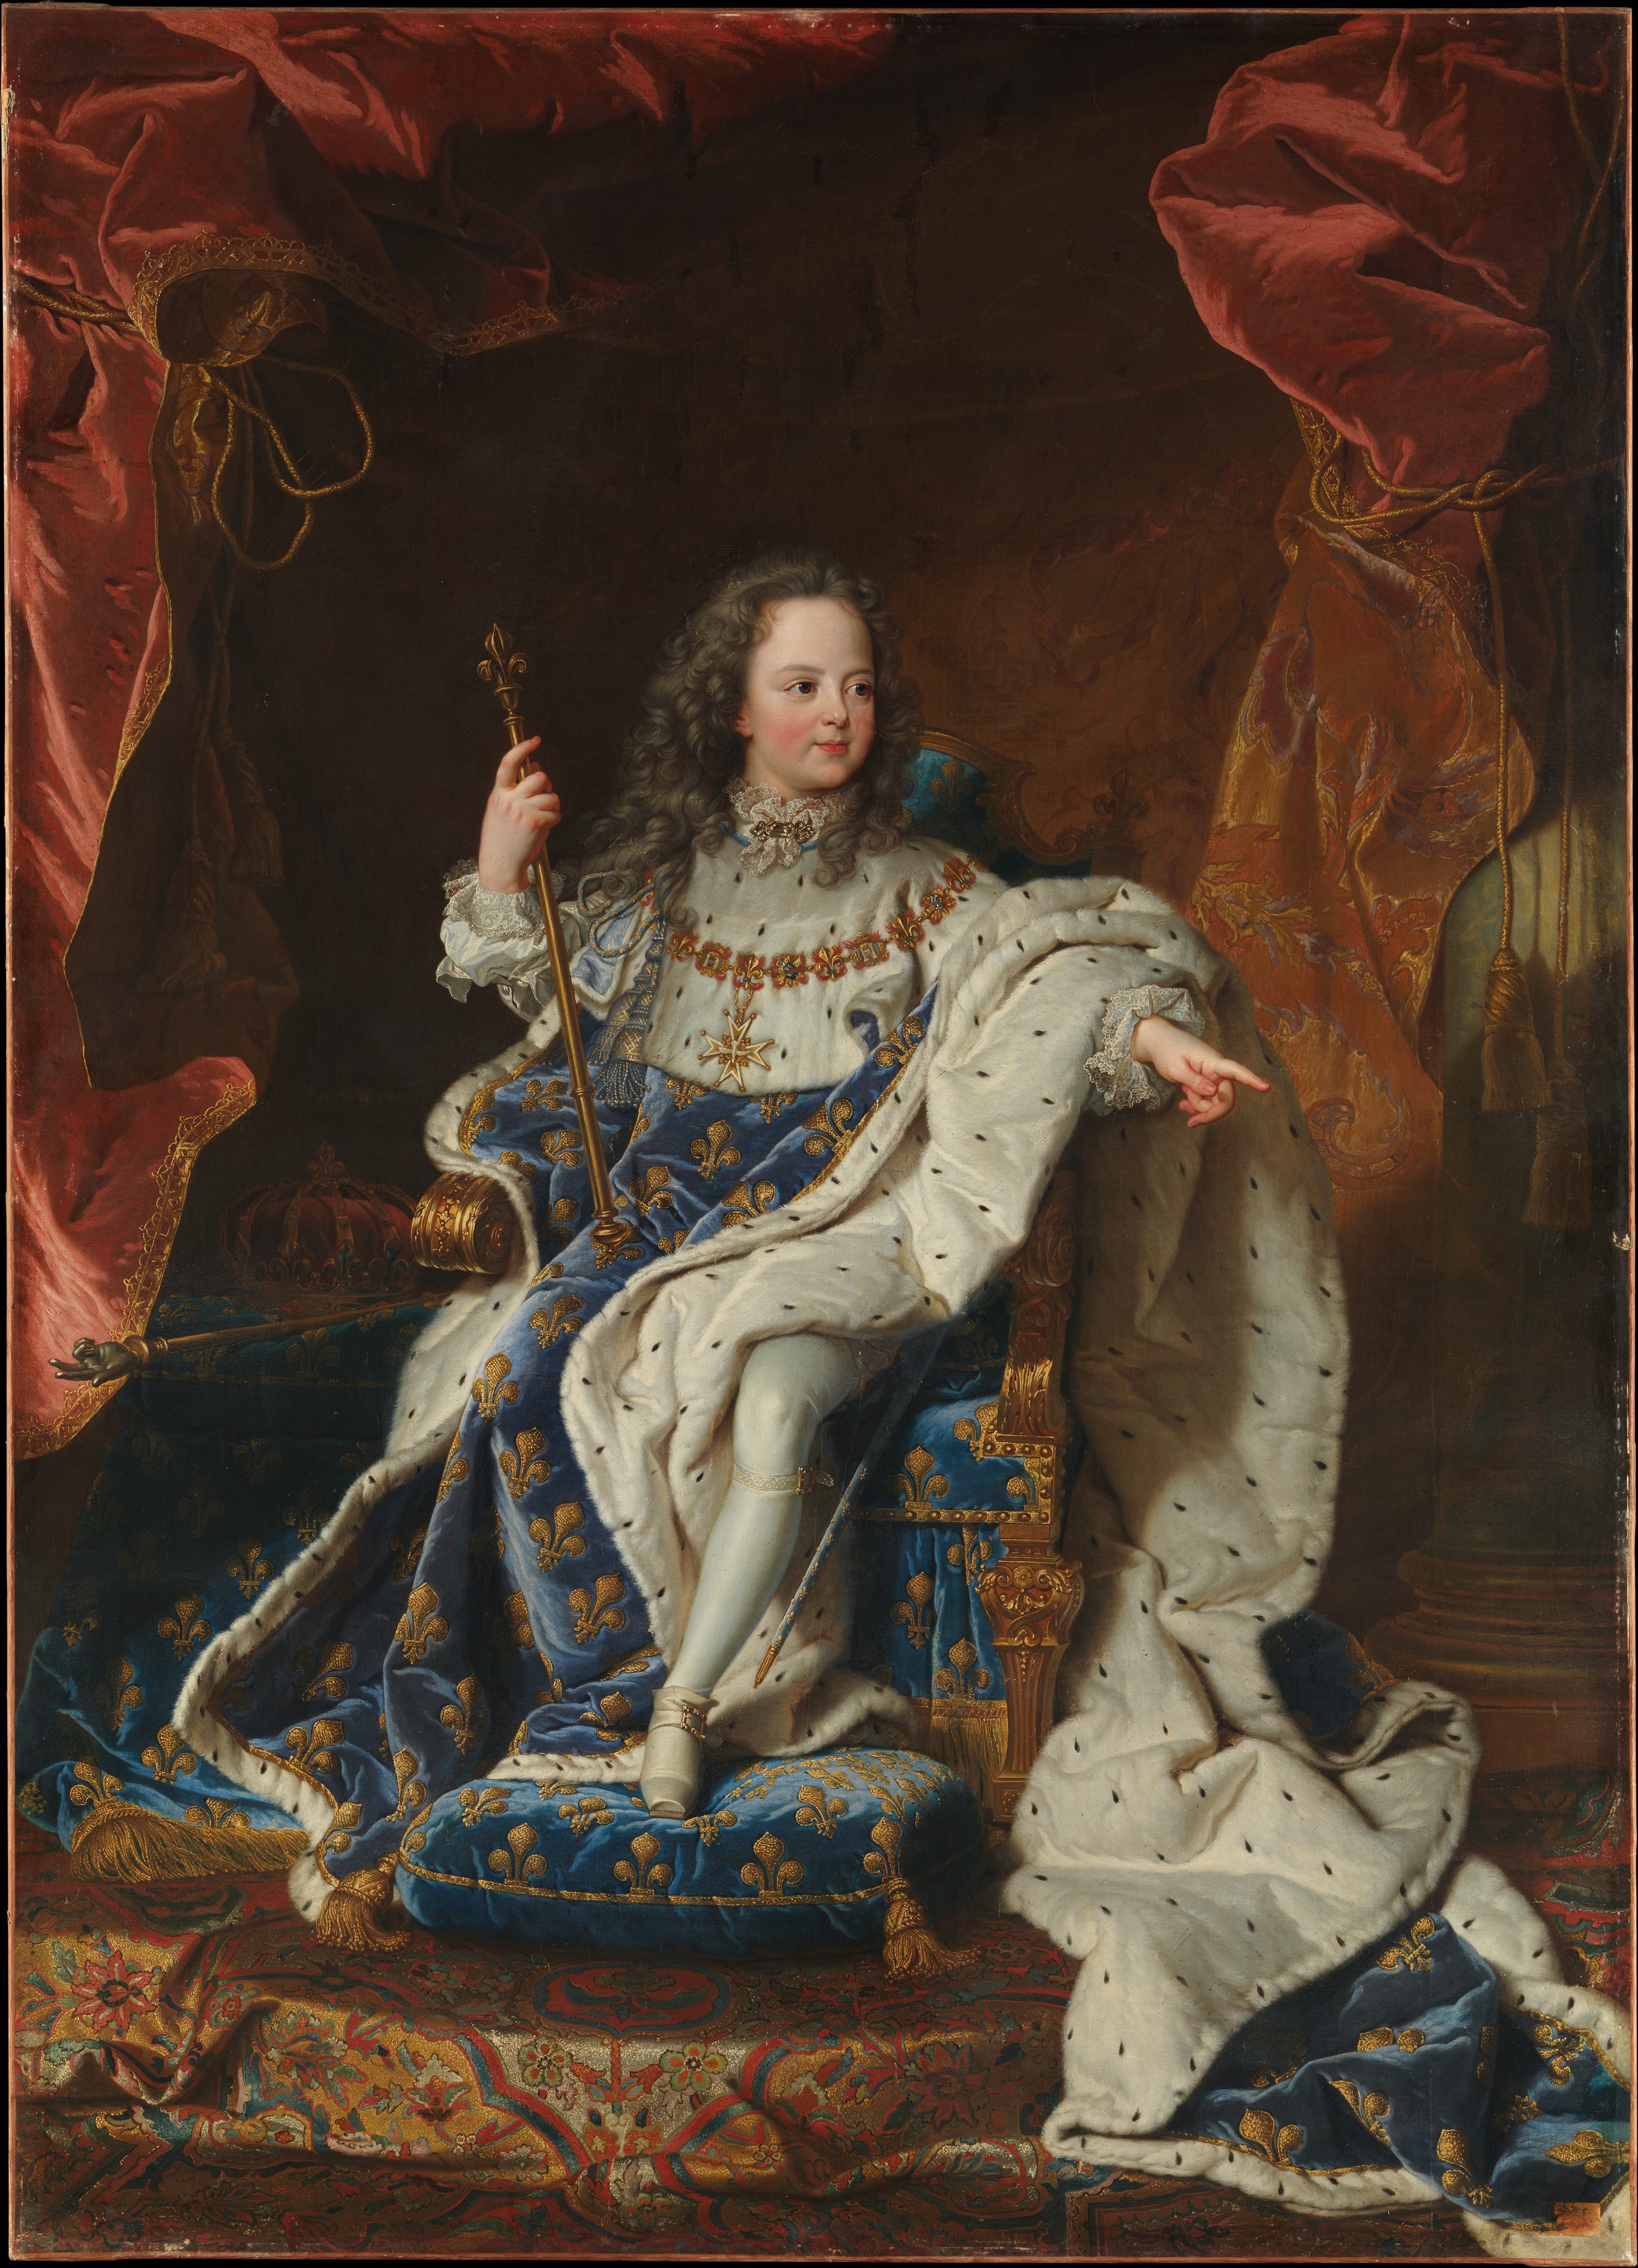 Louis XV - Wikipedia